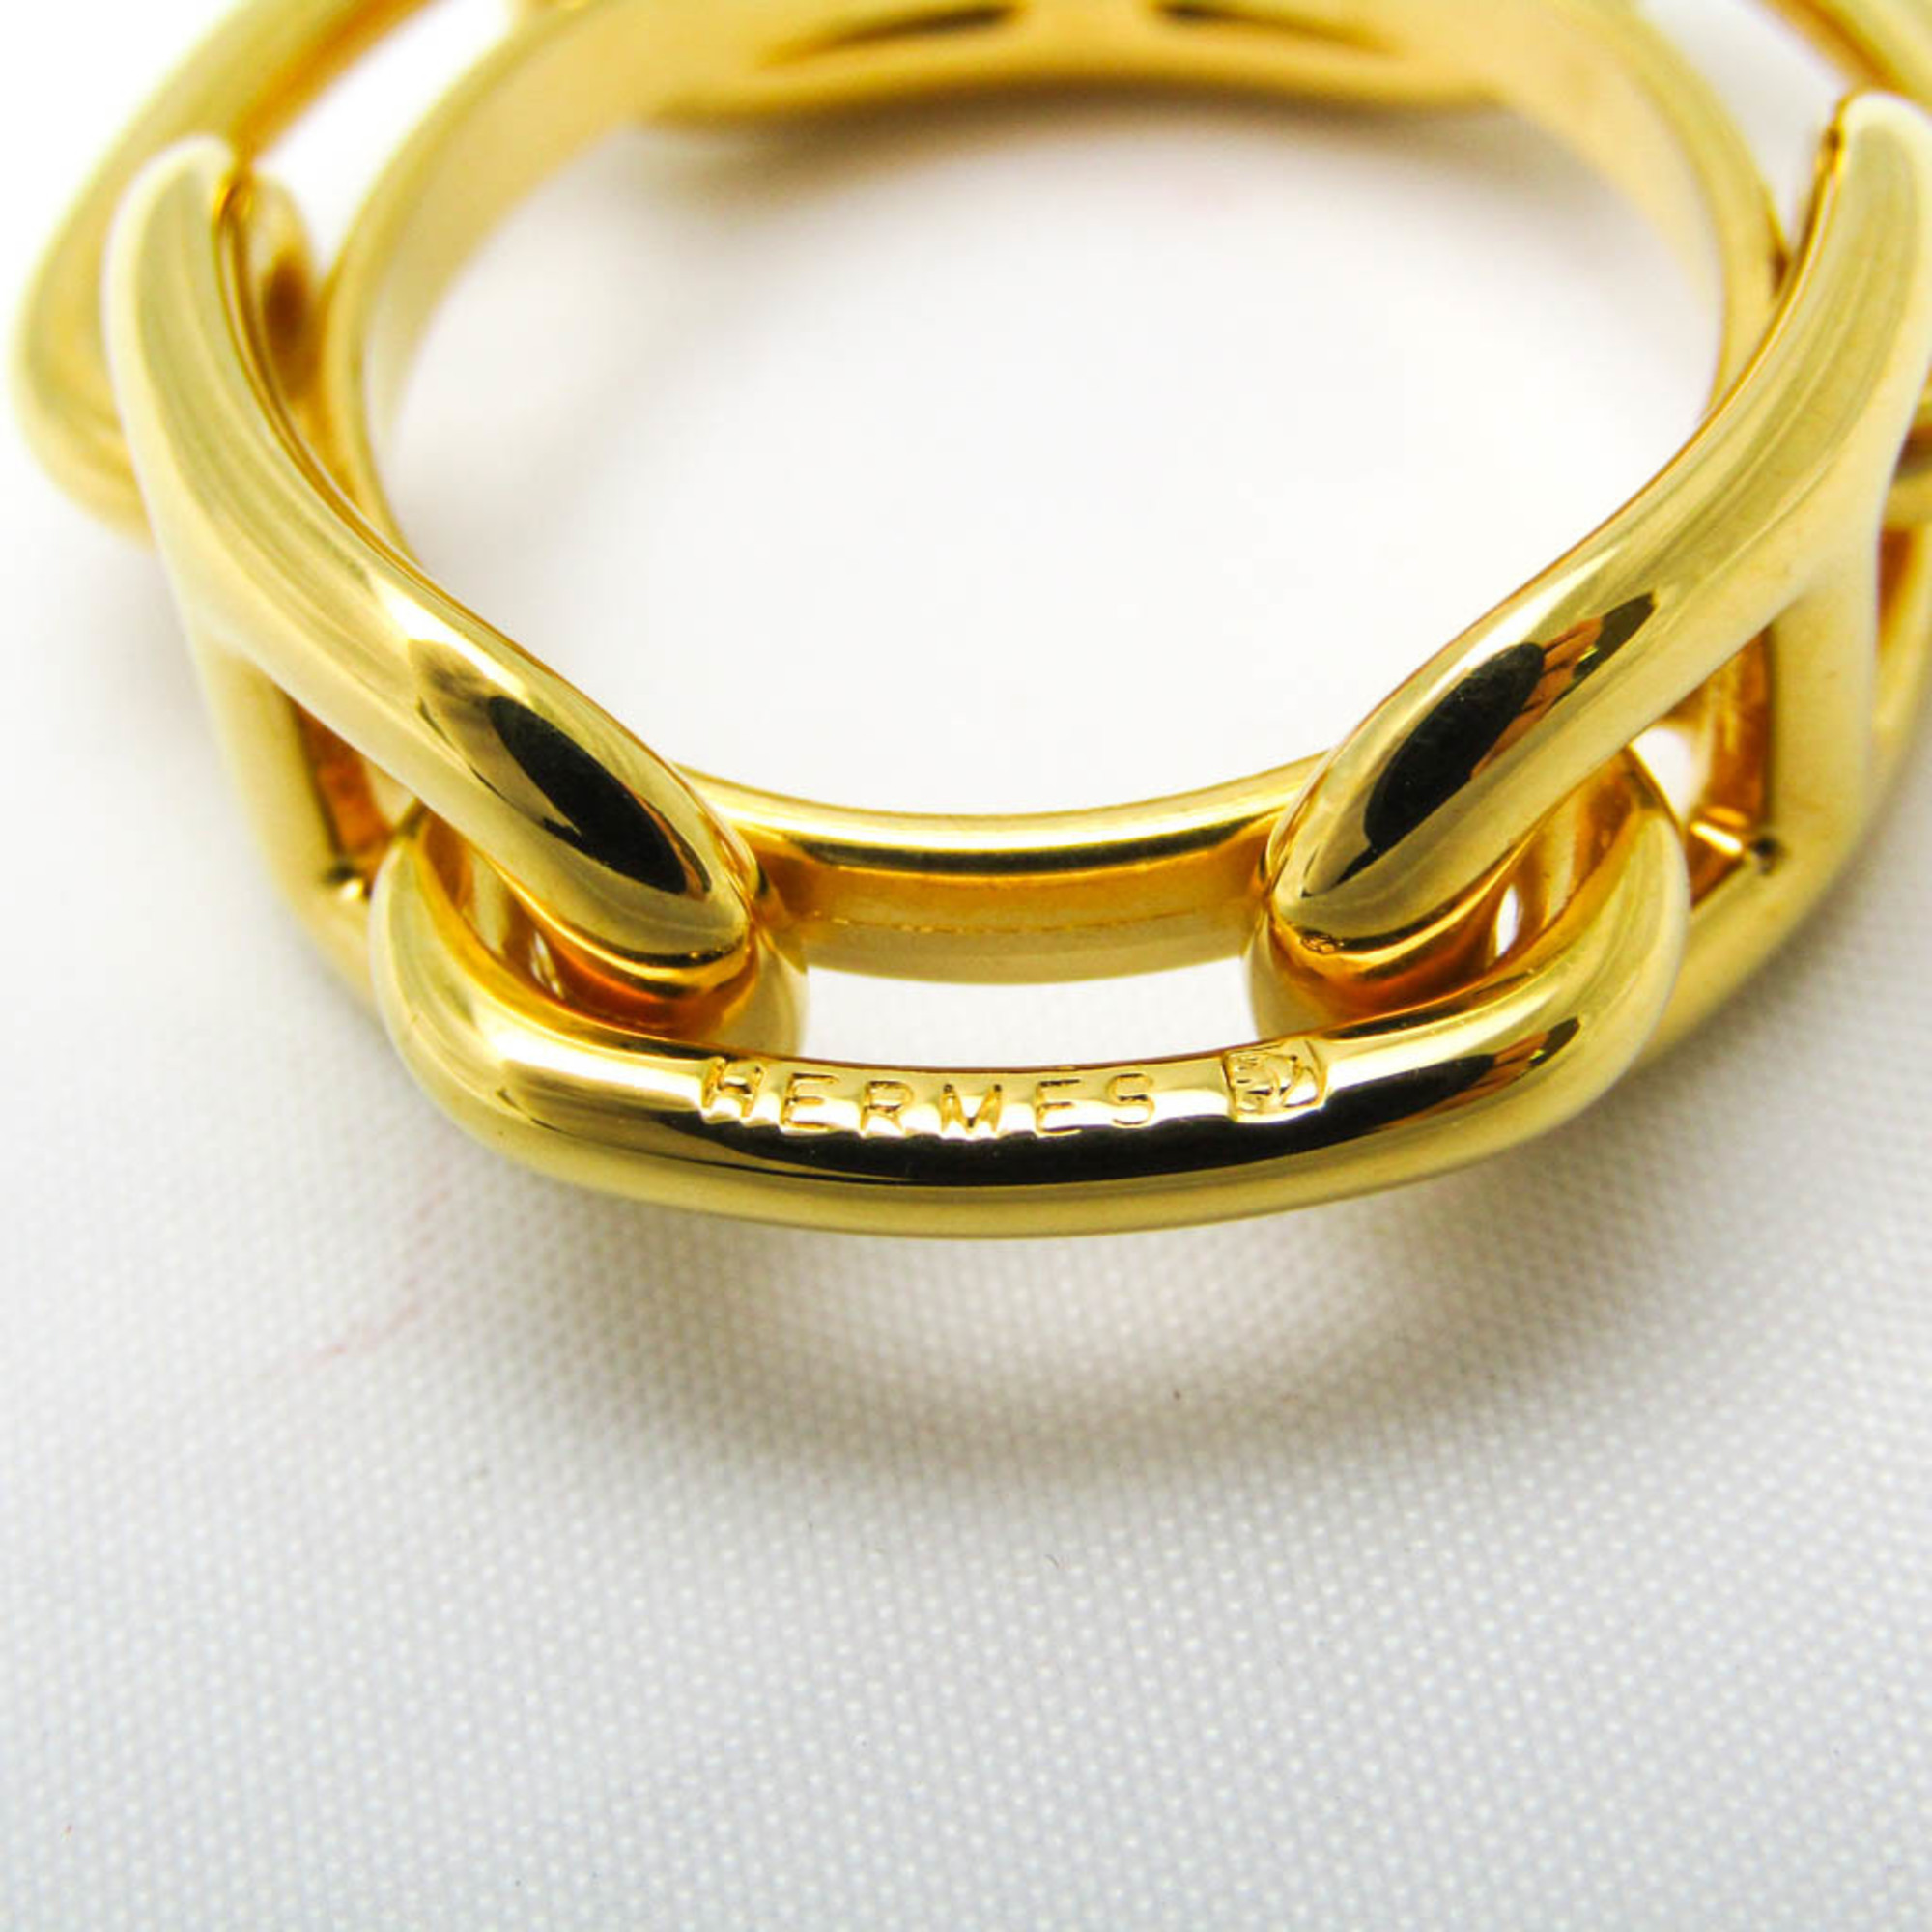 Hermes Metal Scarf Ring Gold Lugate Shane Dunkle